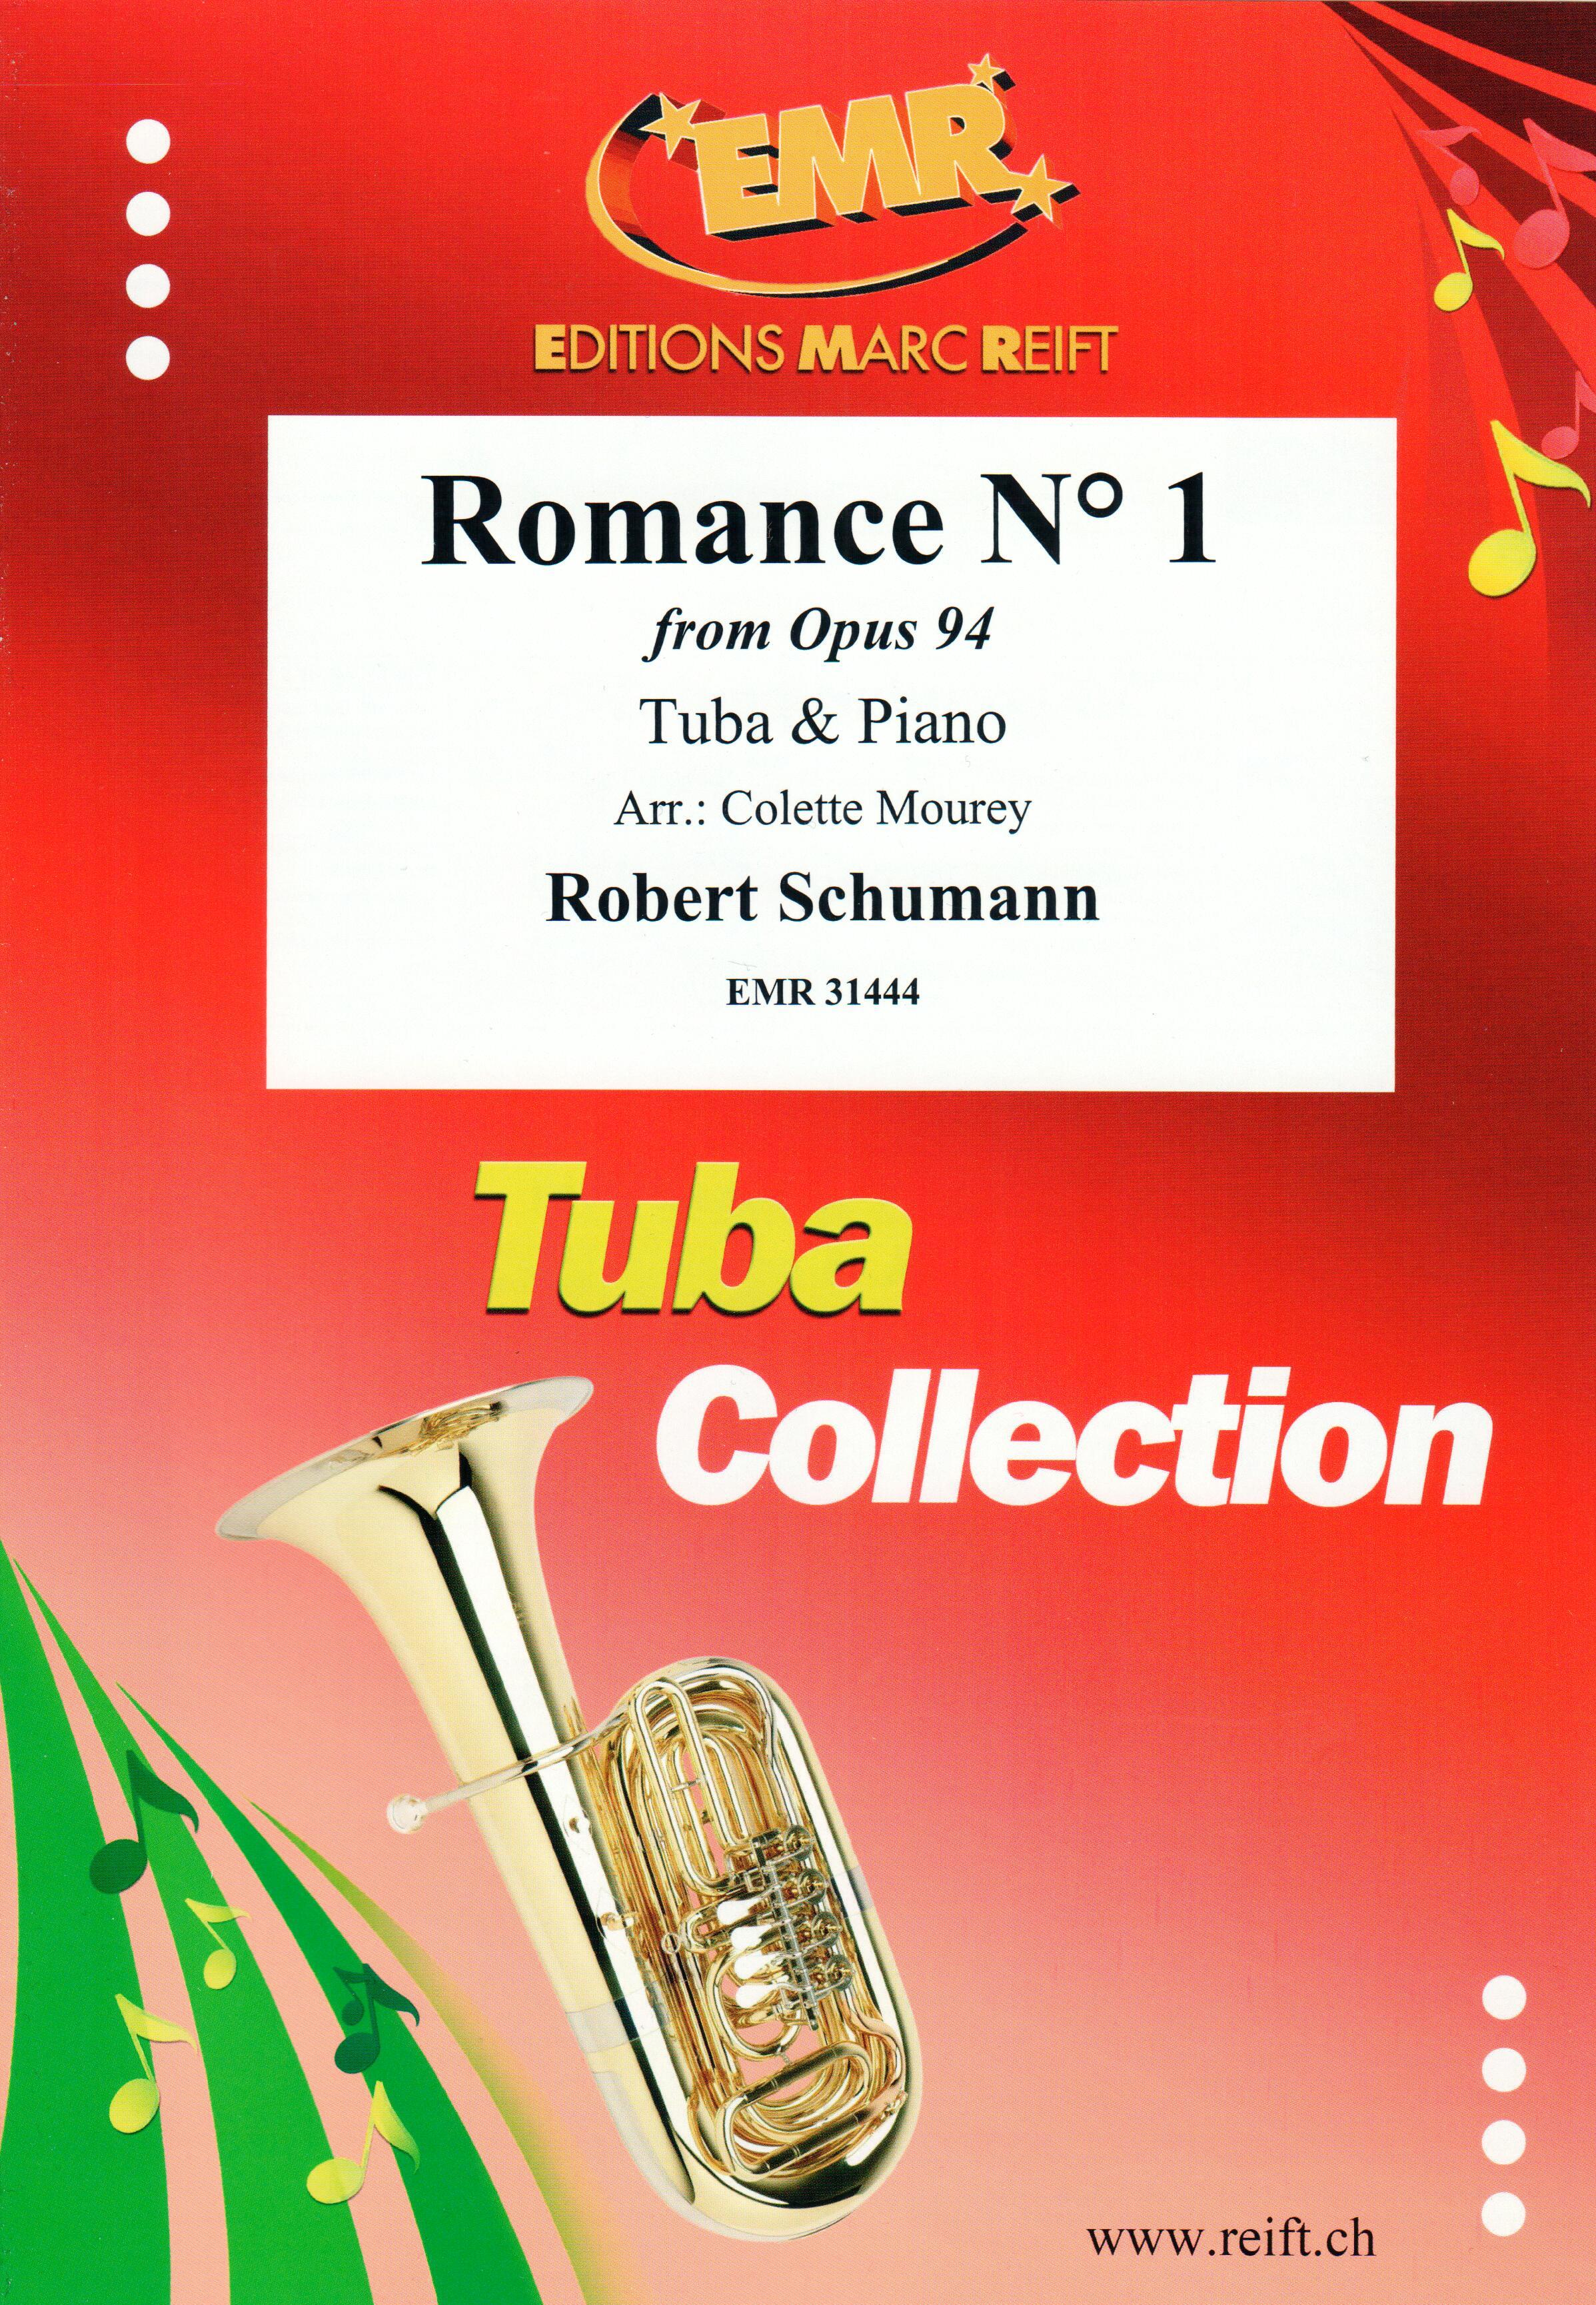 ROMANCE N° 1, SOLOS - E♭. Bass